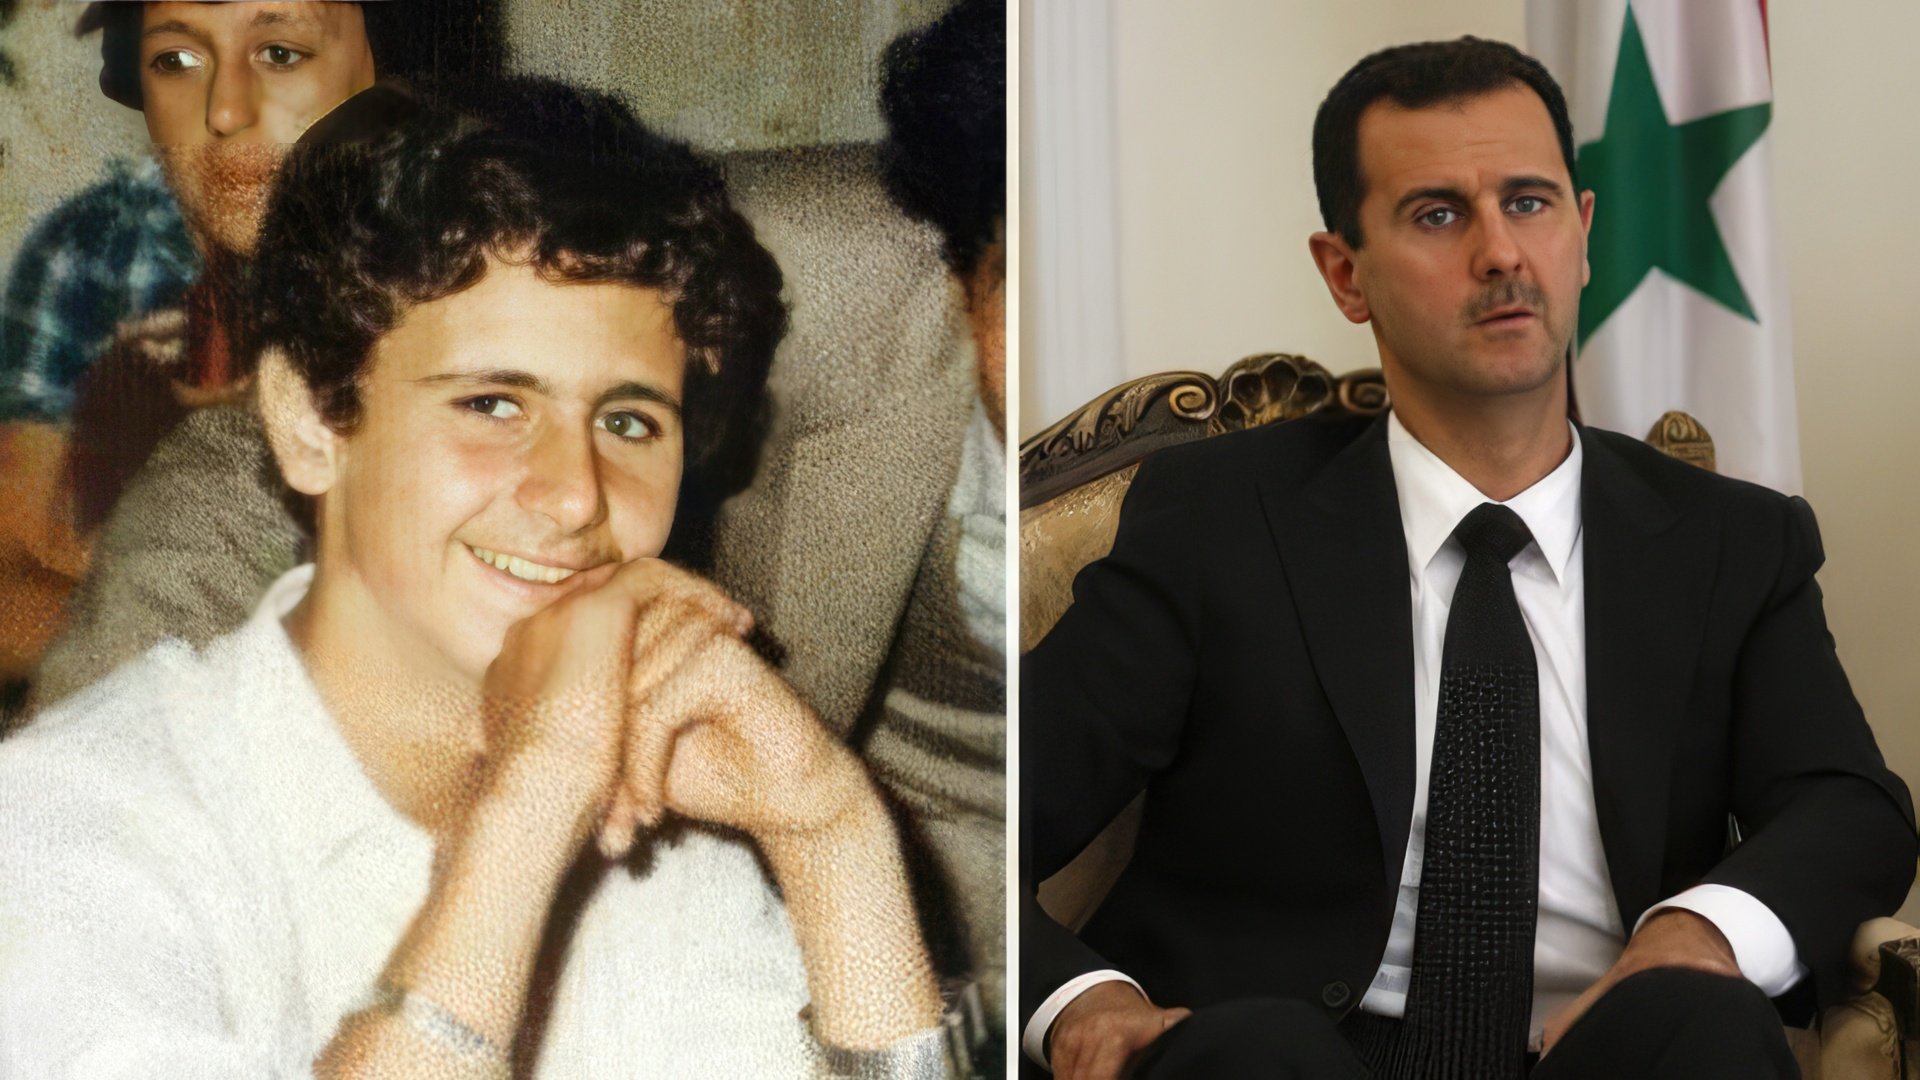 Bashar Al-Assad in his youth